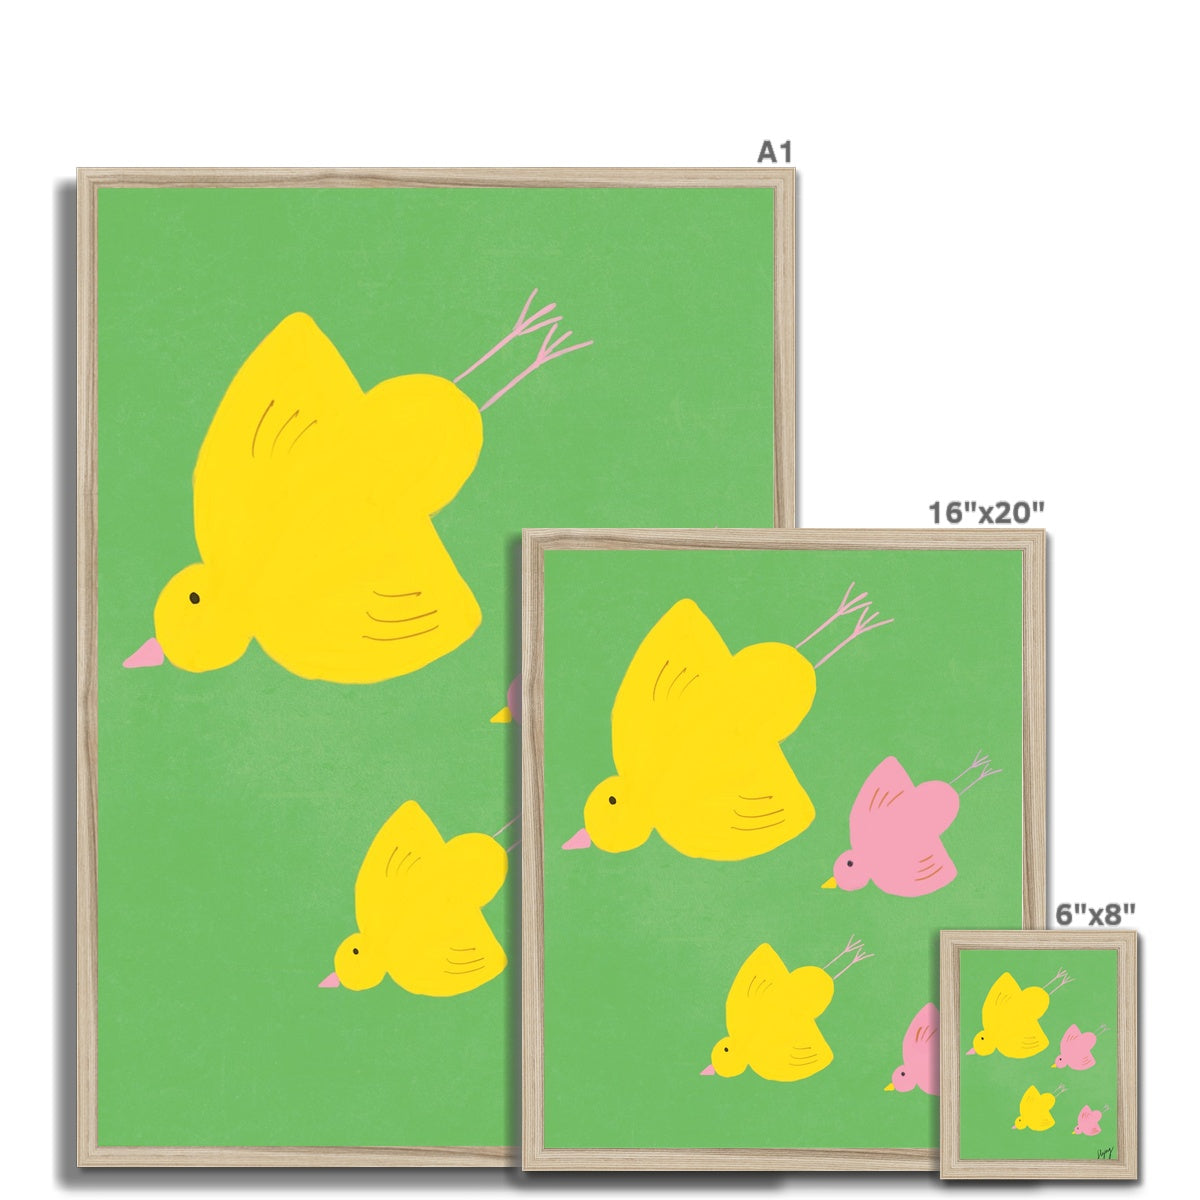 Flying Birds Print - Green, Yellow, Pink Framed Print